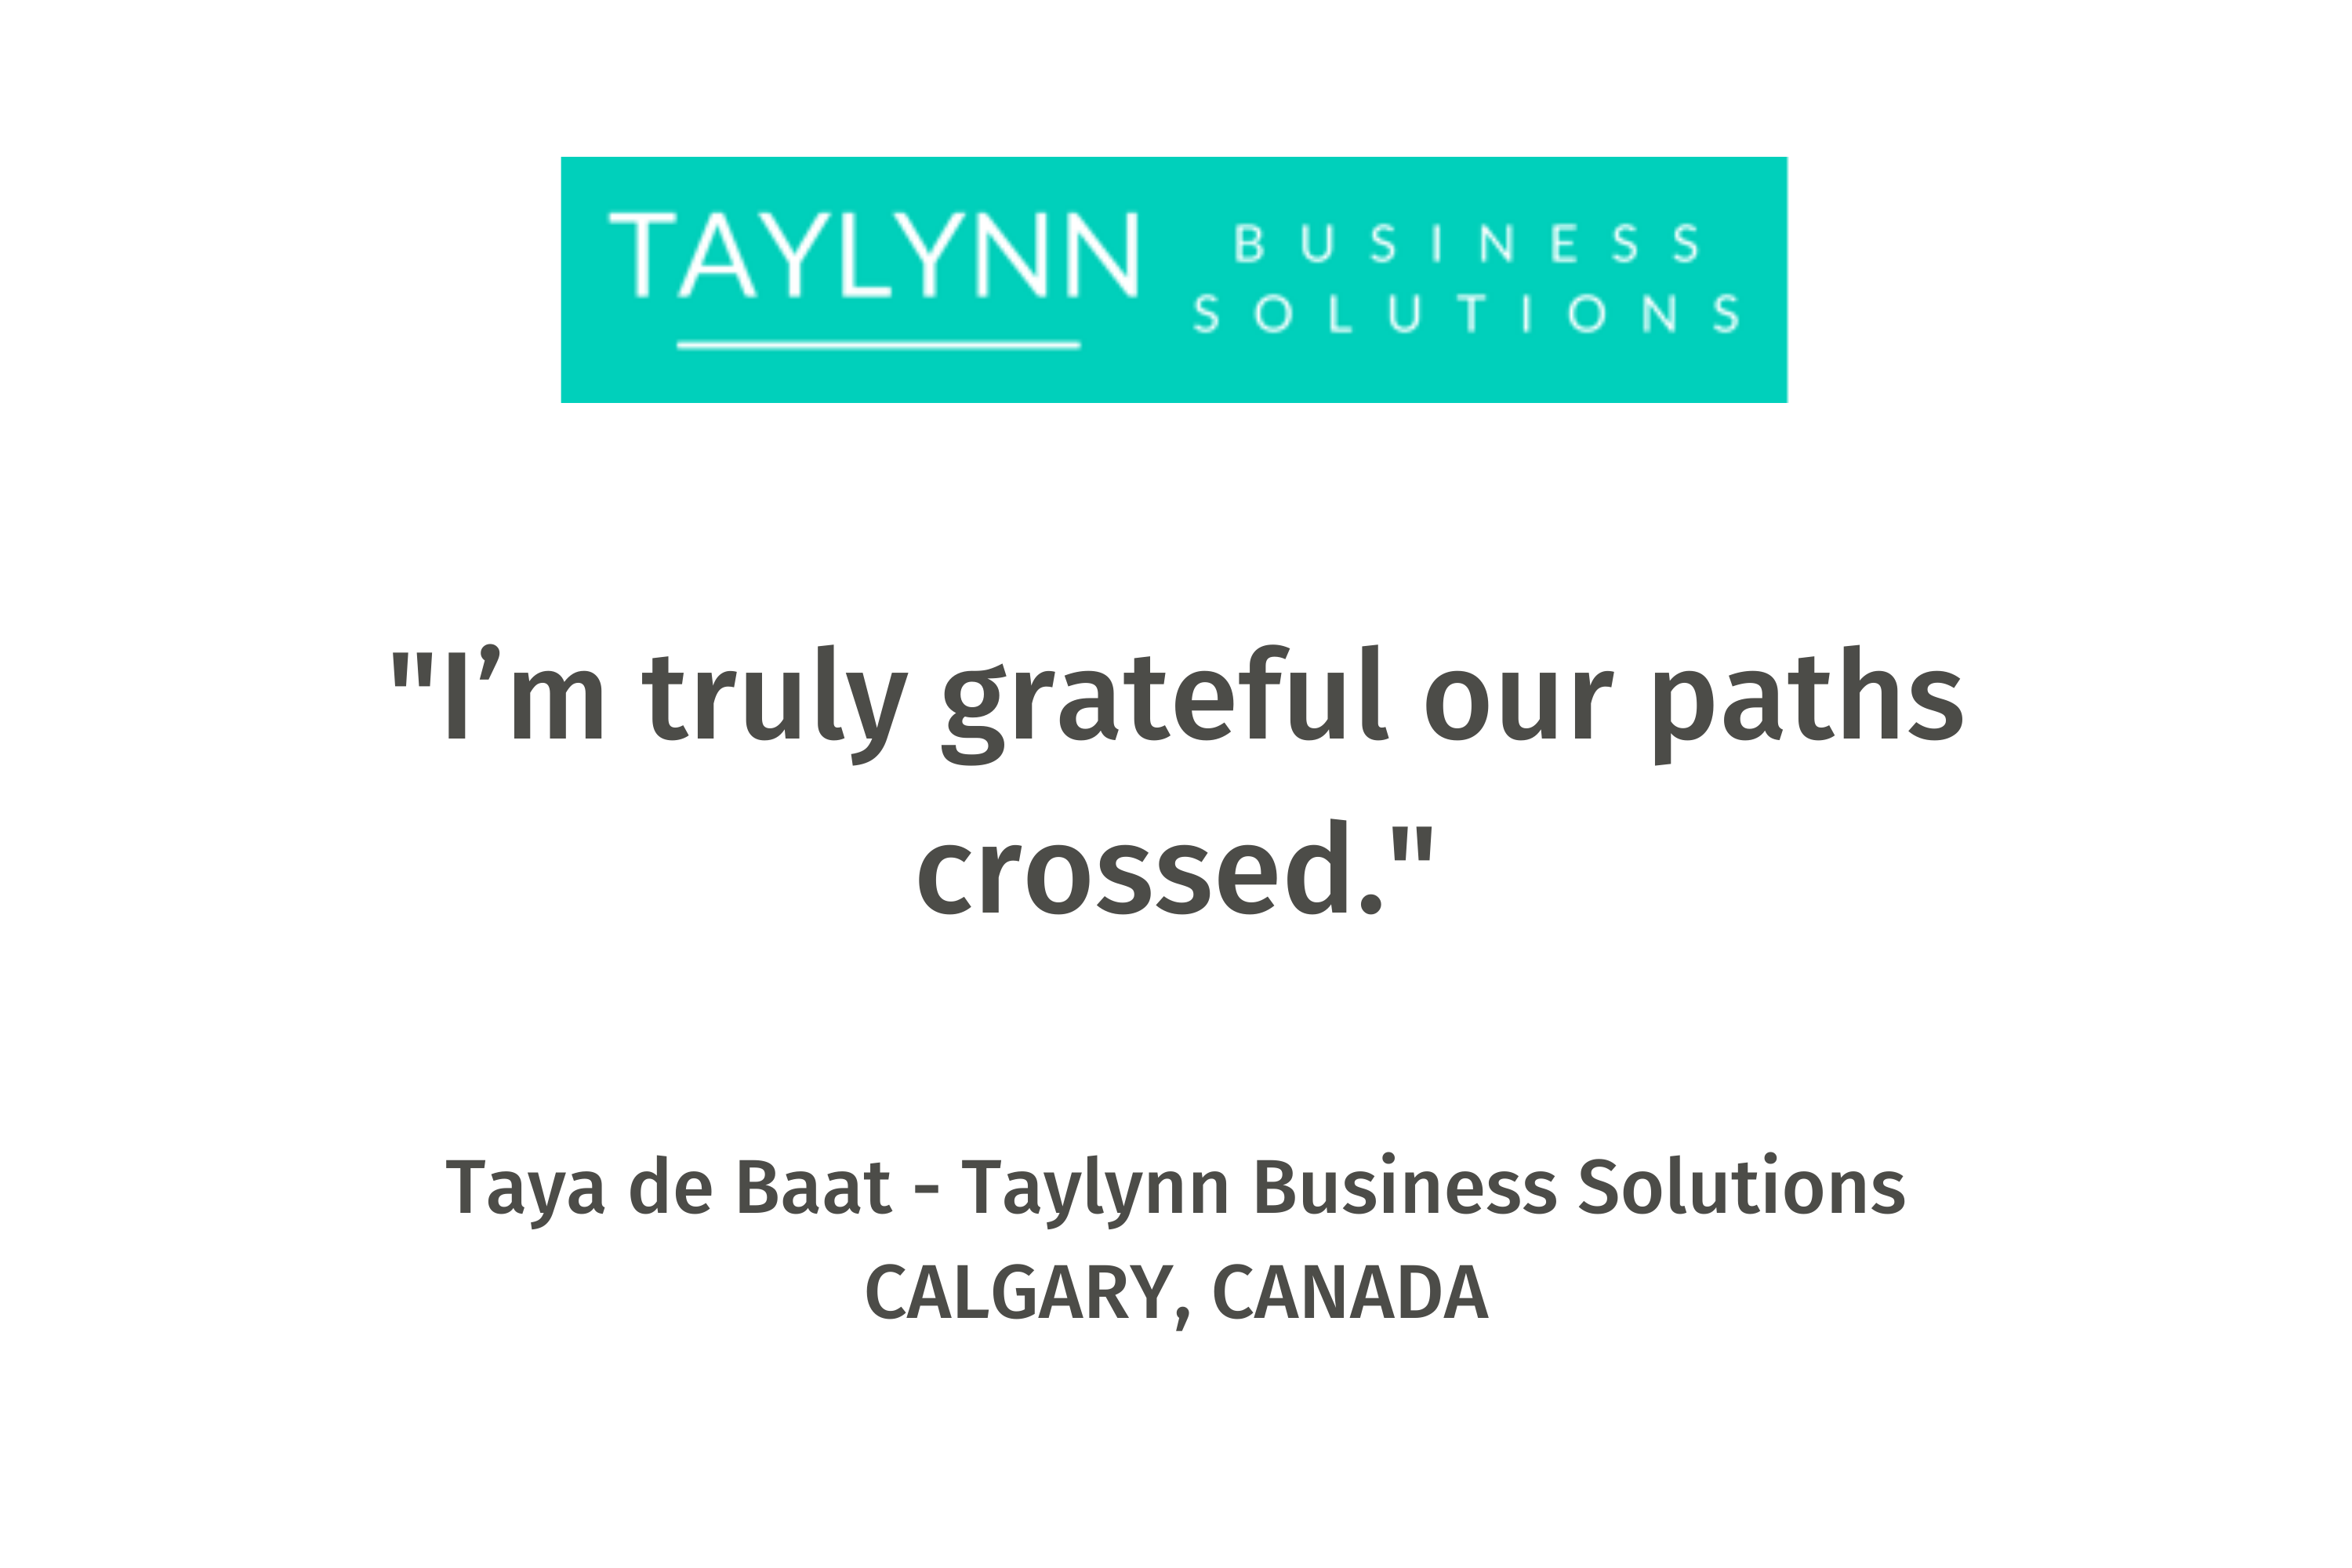 Taylynn Business Solutions